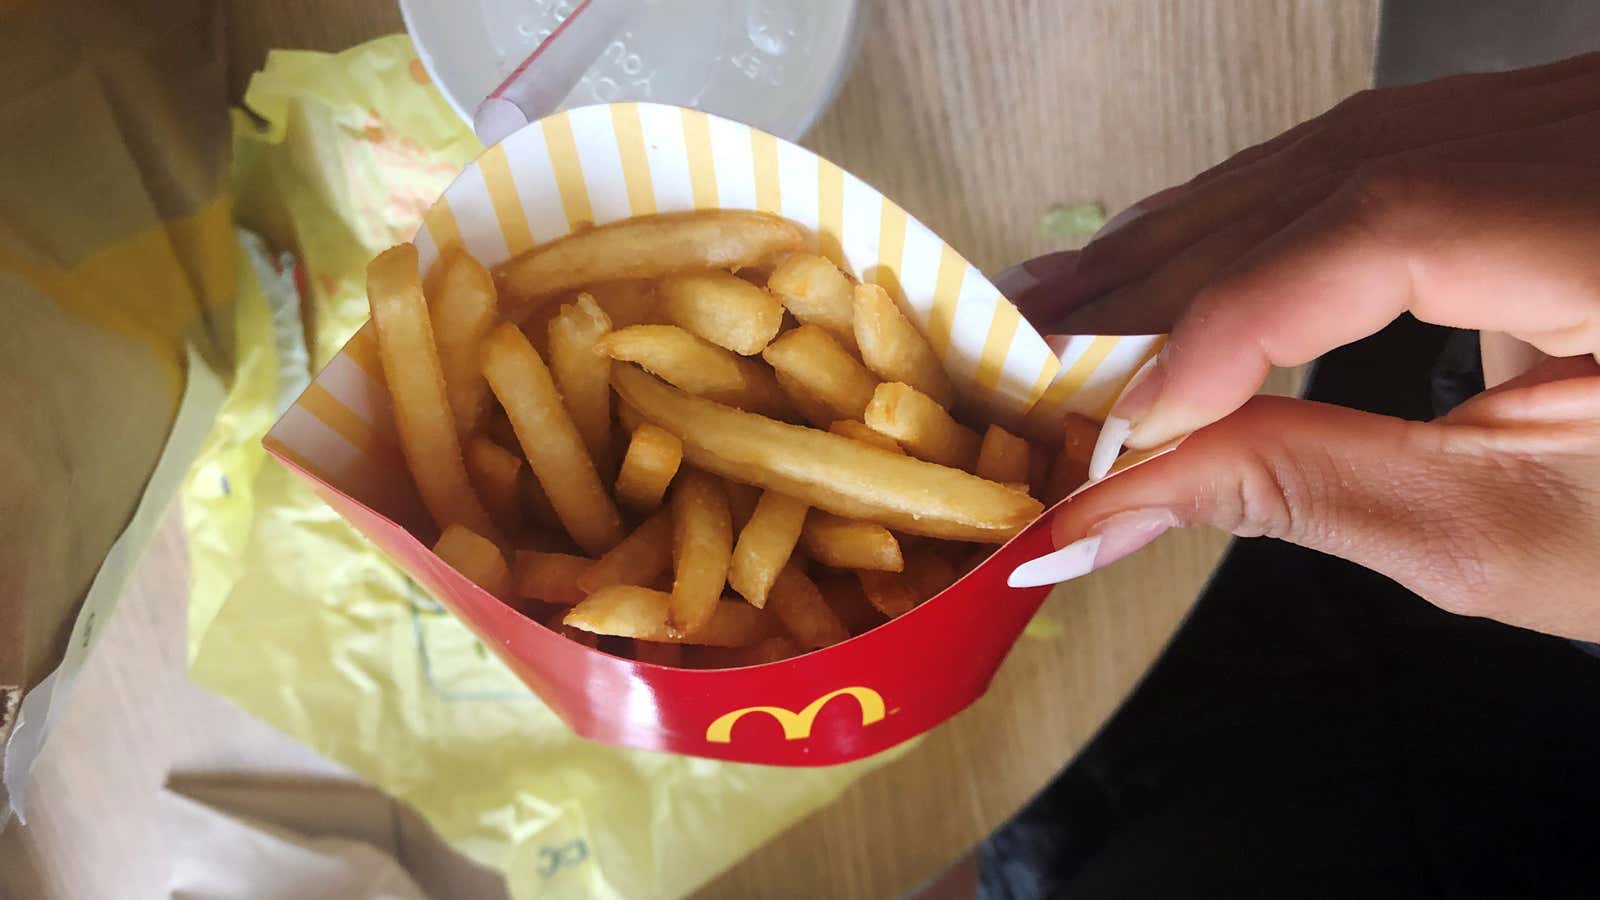 McDonald’s wants to set more ambitious emission reduction goals.